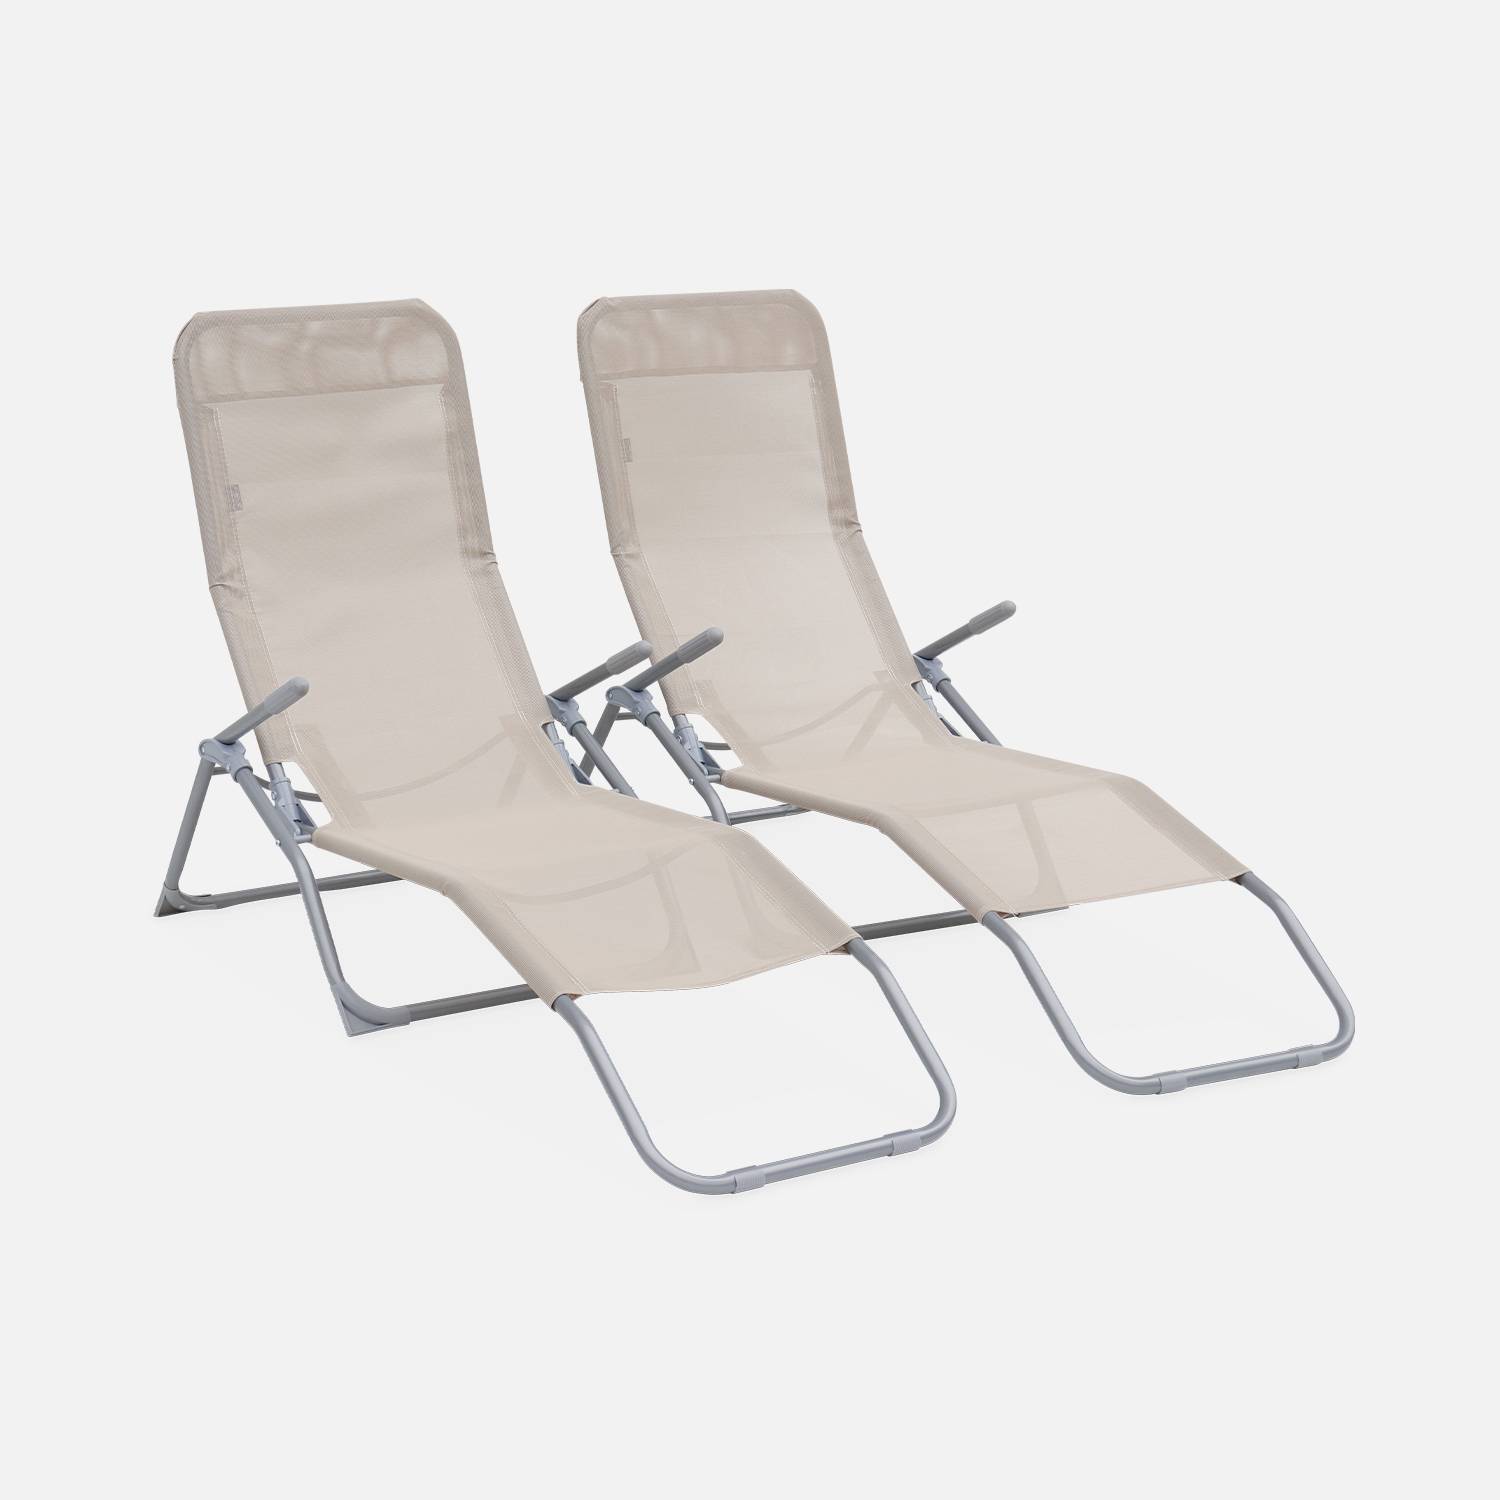 Set van 2 opvouwbare ligstoelen - Levito Taupe - Ligstoelen van textileen, 2 posities, opvouwbare ligstoelen | sweeek